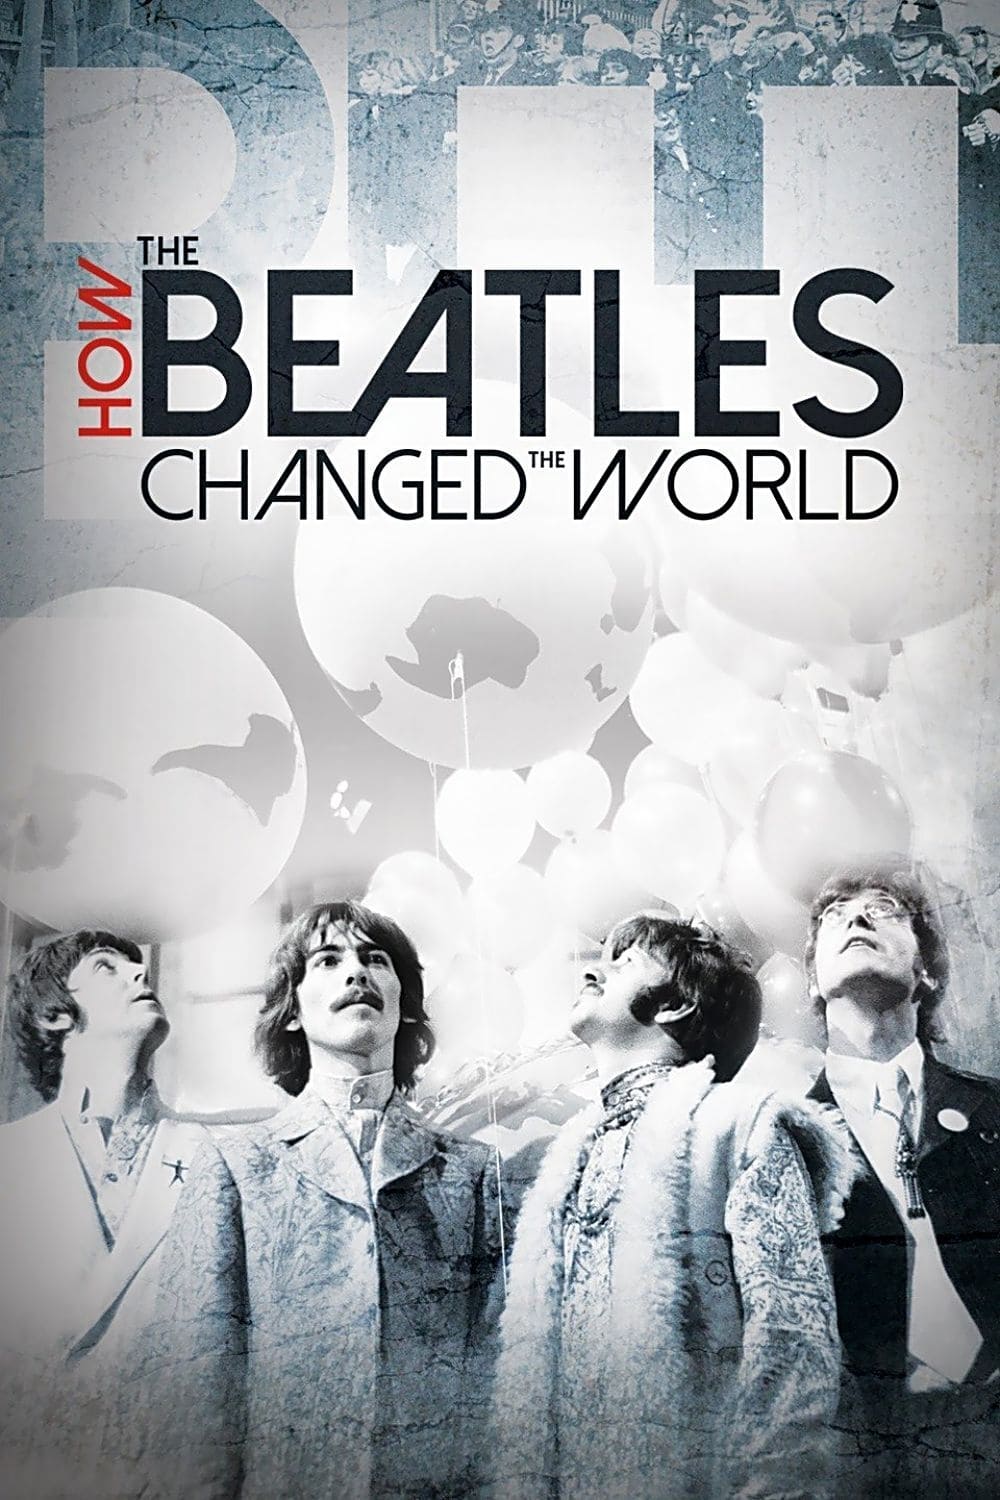 The Beatles: Ban Nhạc Thay Đổi Thế Giới - How the Beatles Changed the World (2017)